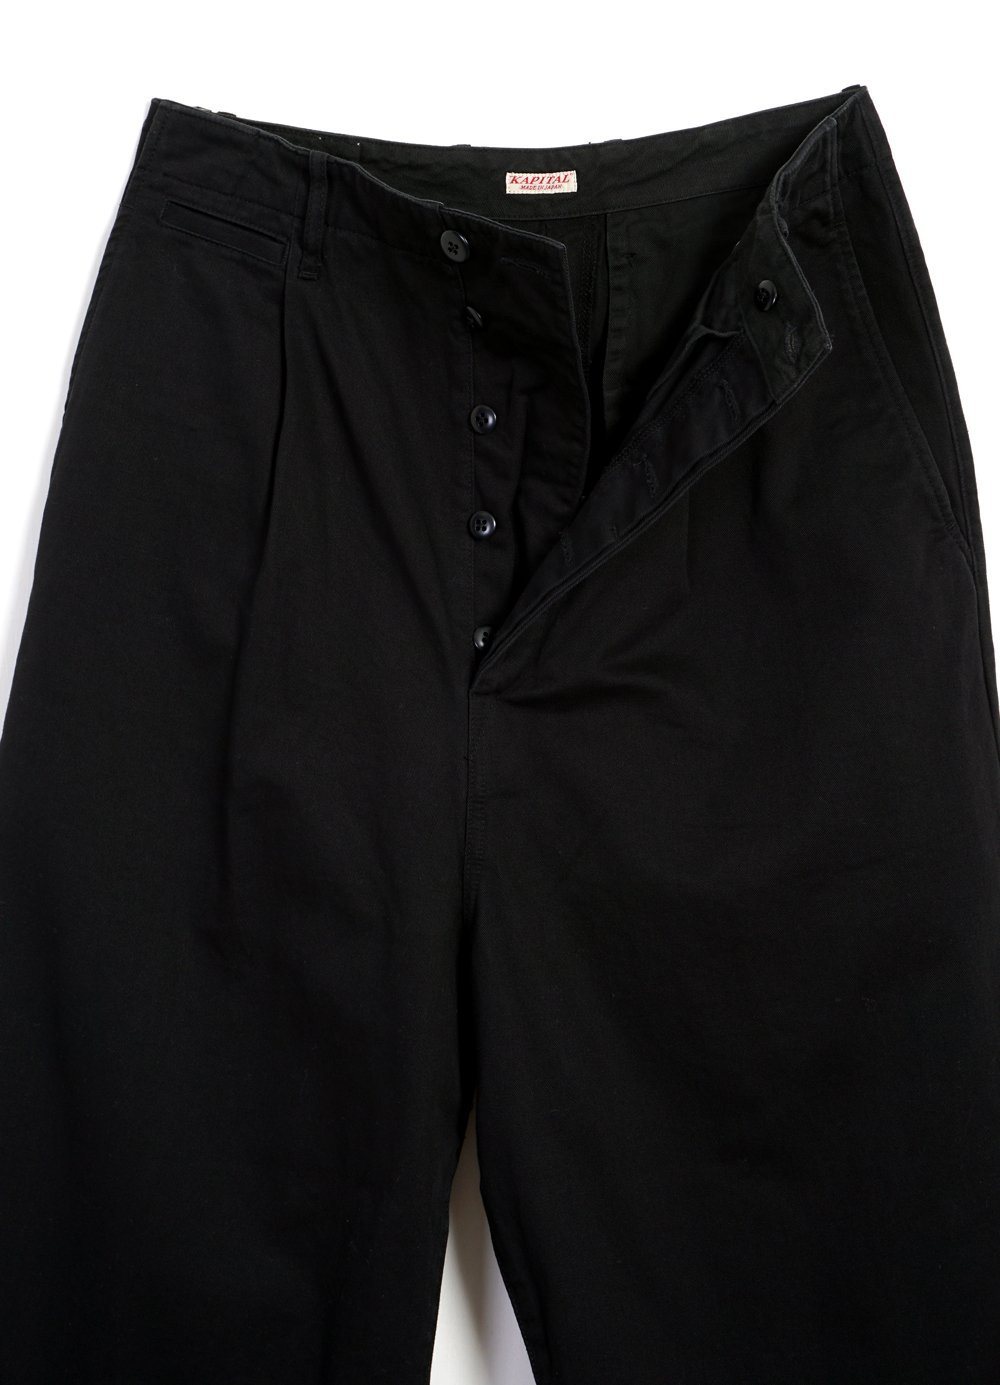 Garments HANSEN HIGH WAISTED PANTS I BLACK CHINO NIME I |